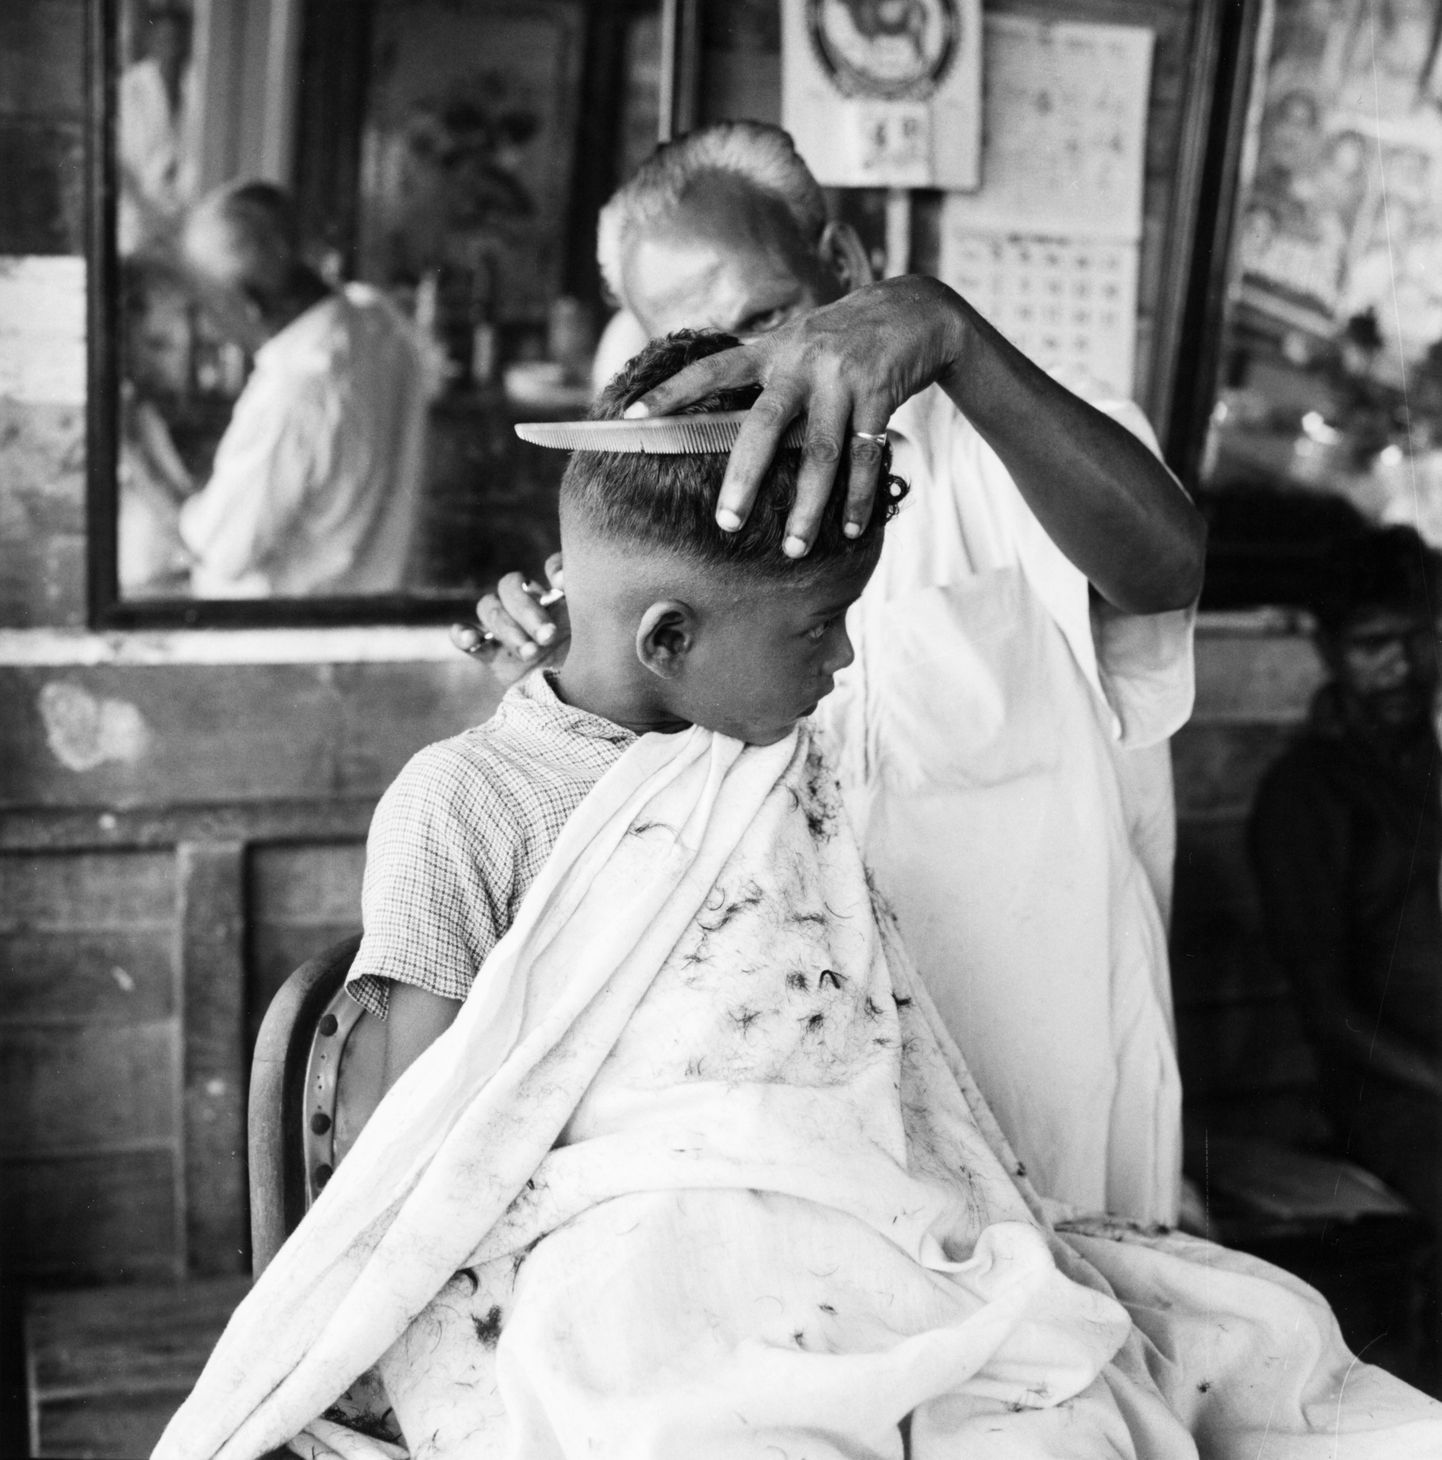 Poiss juuksuris. Pilt on illustreeriv